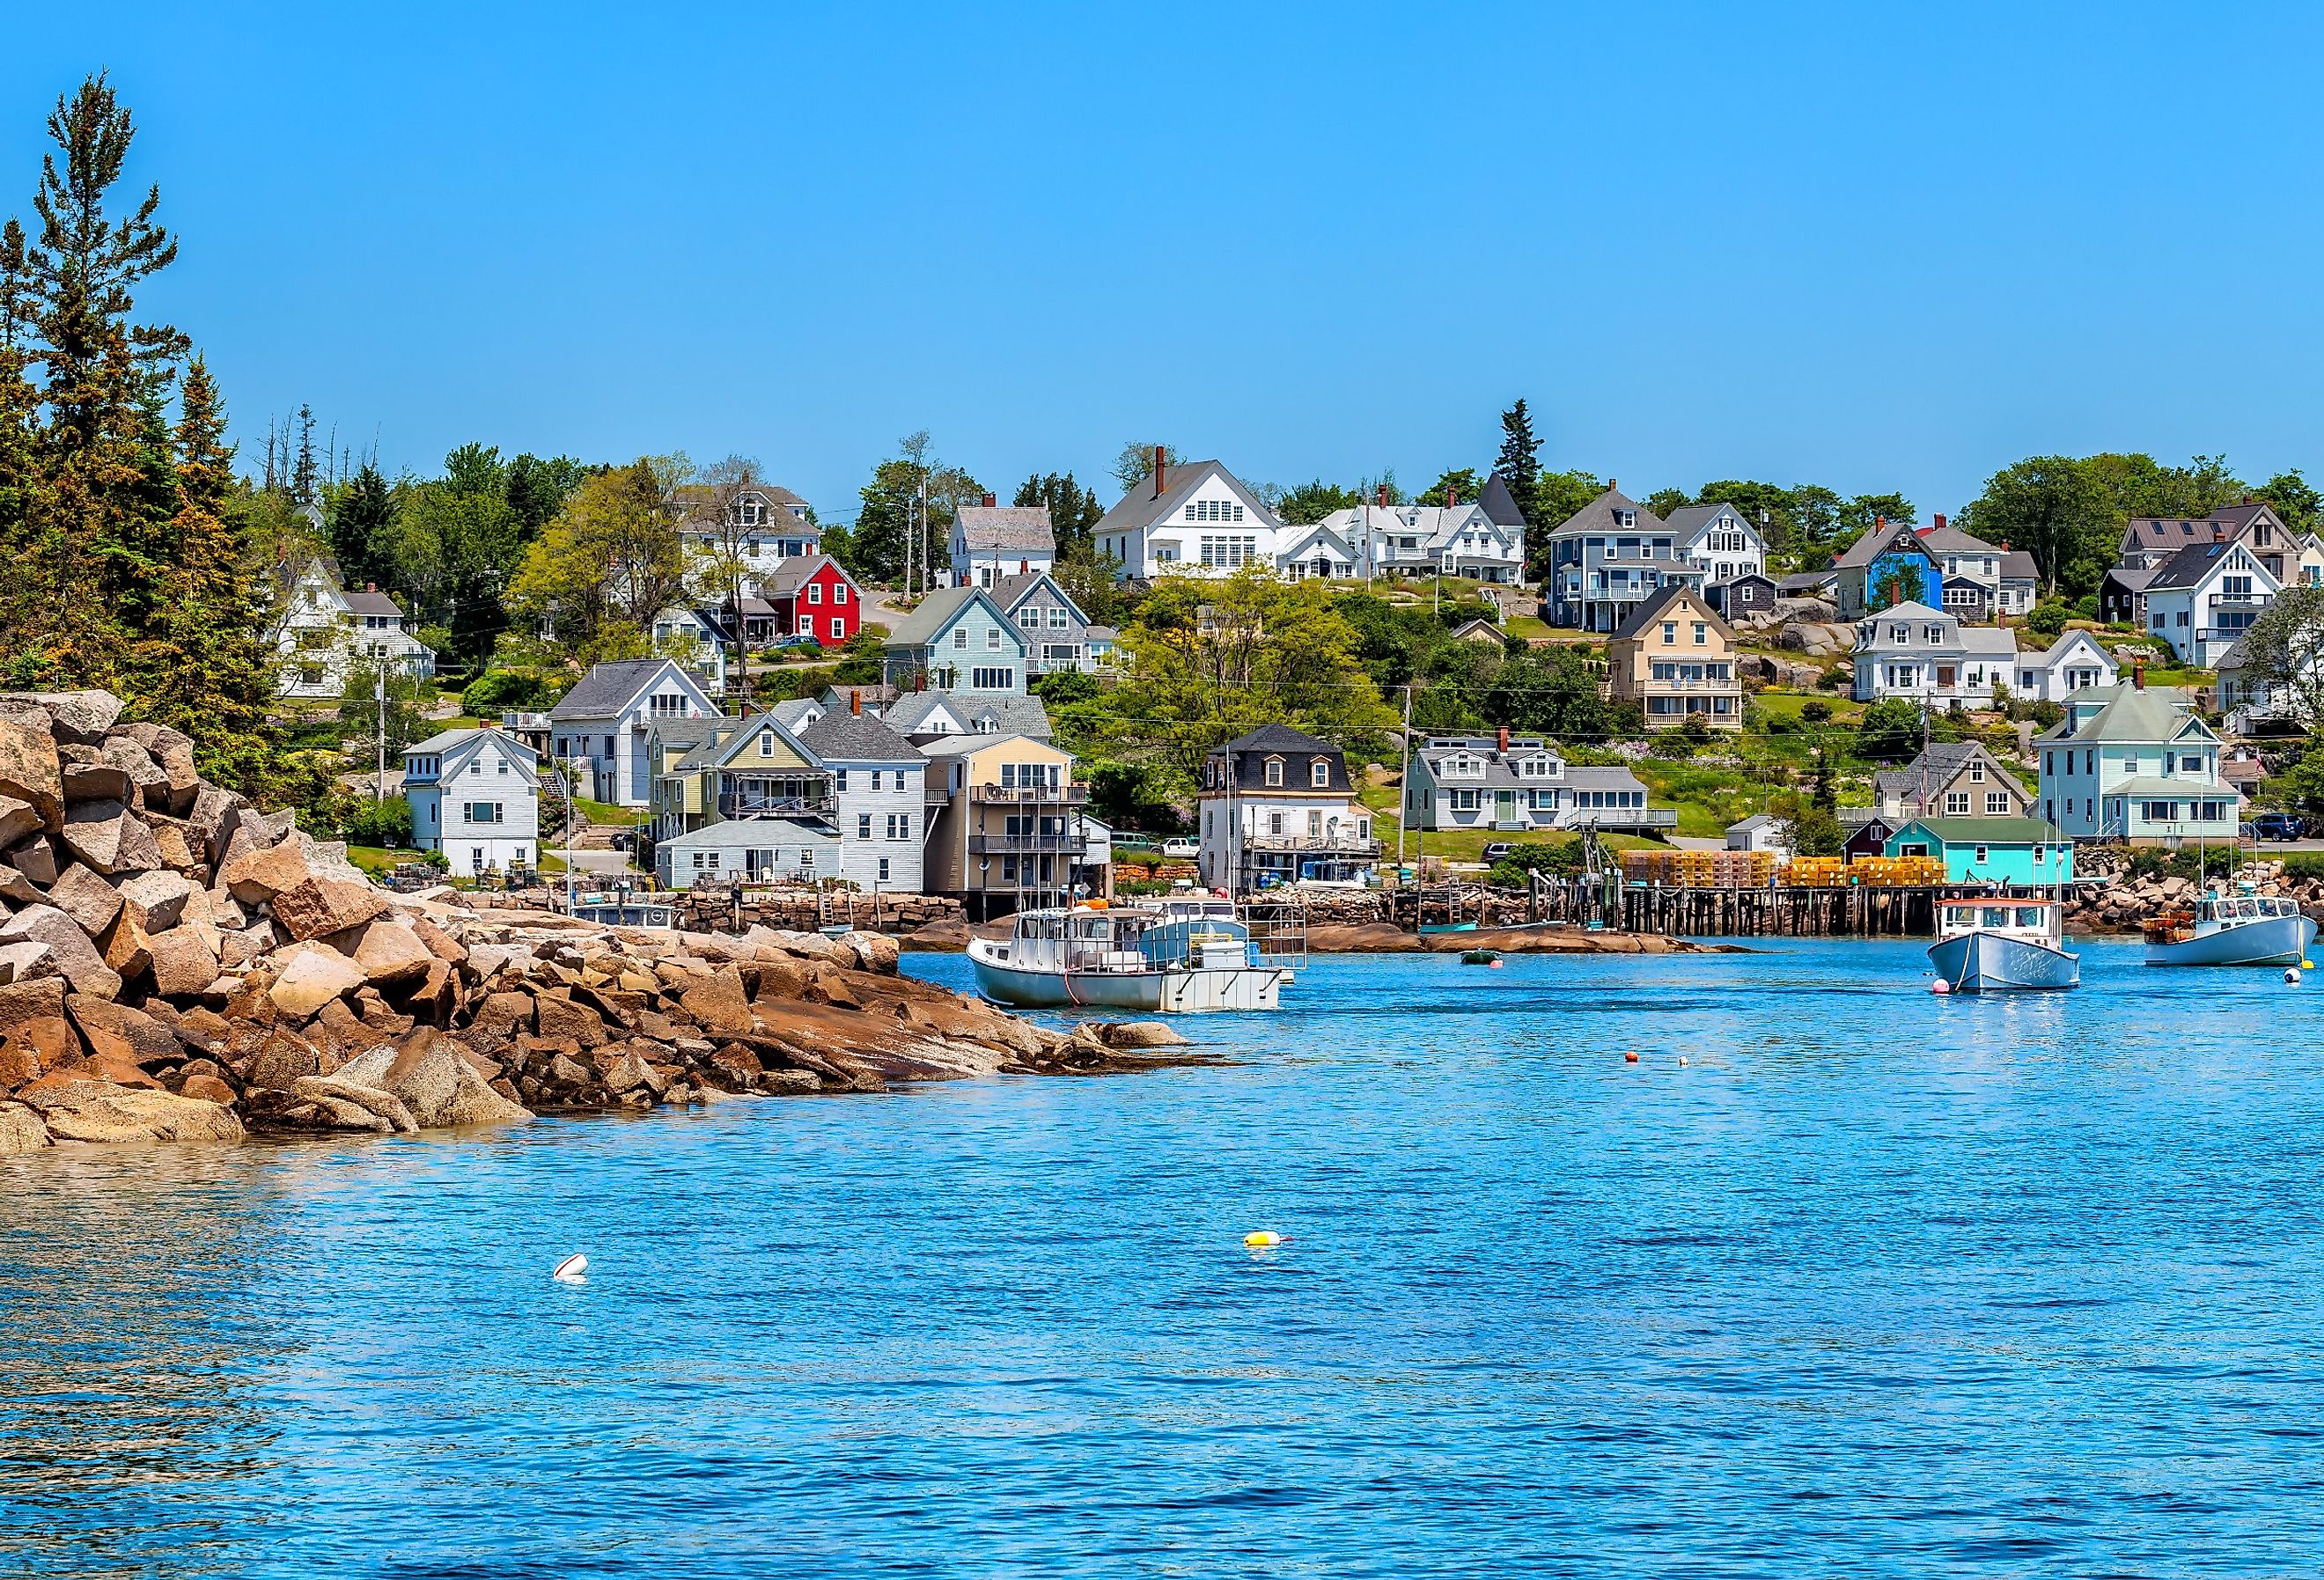 Waterfront and Harbor, Stonington, Maine.